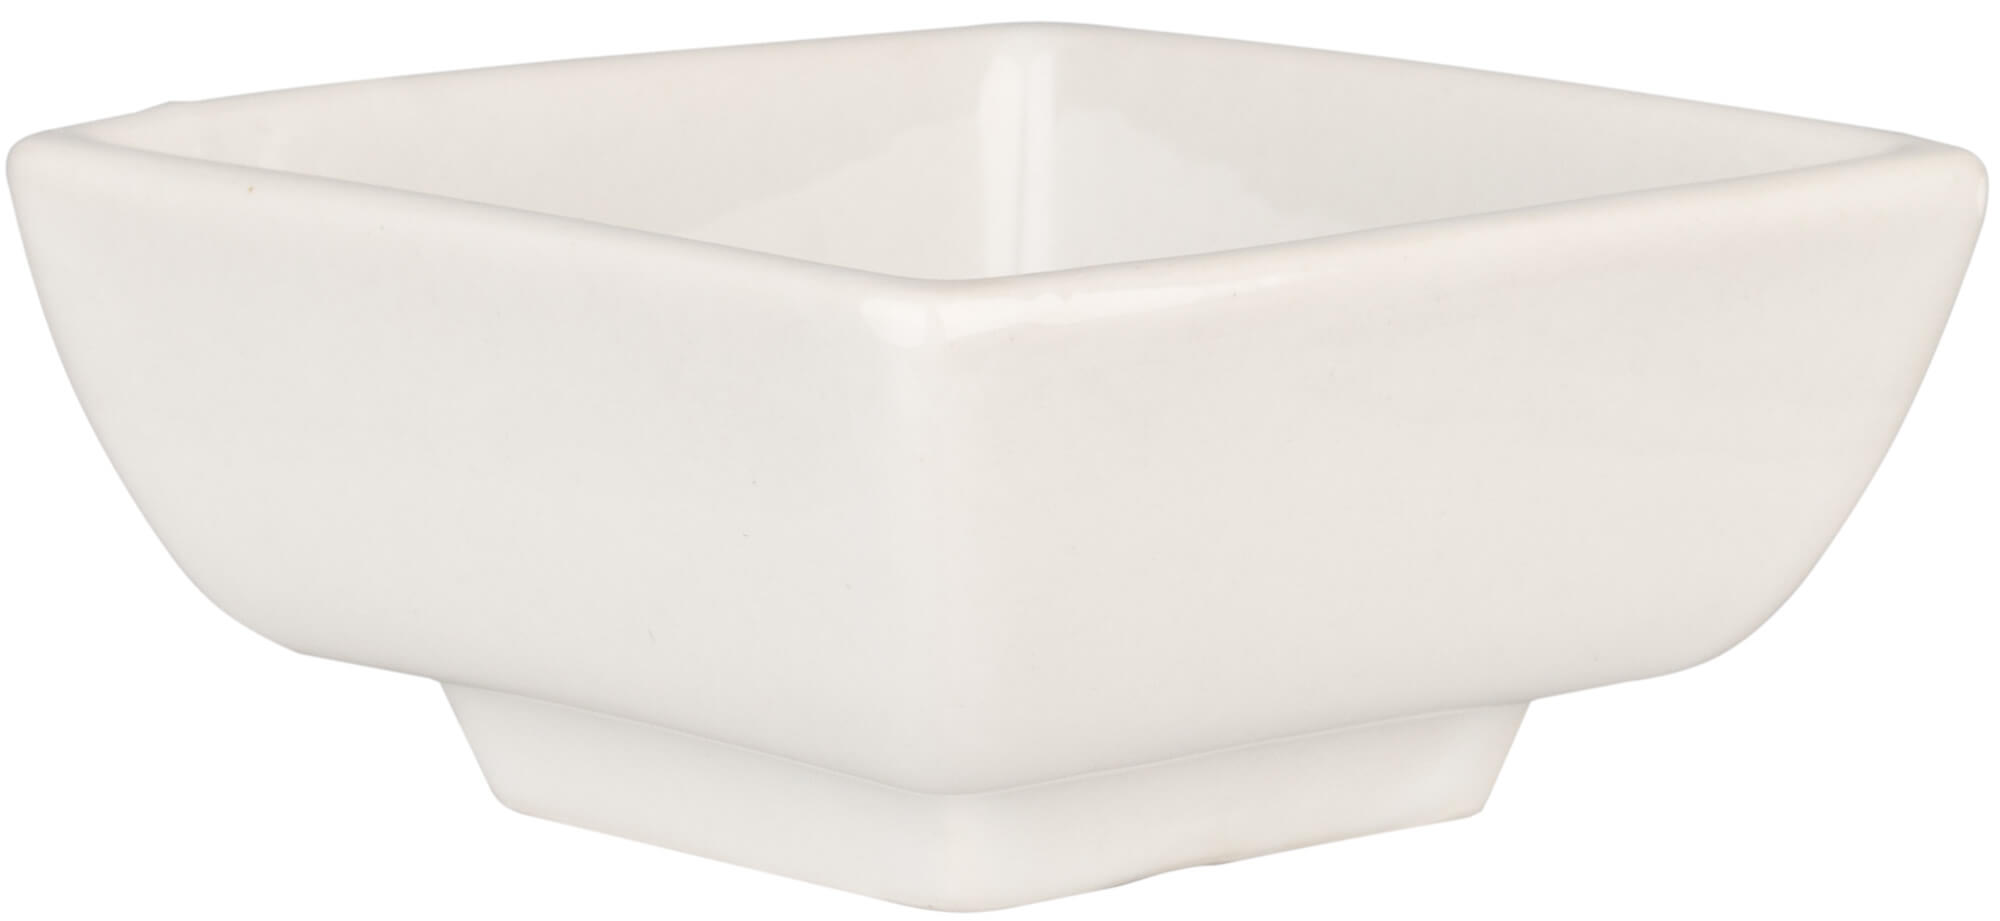 Dip bowl square, porcelain, white - 7x7x4cm